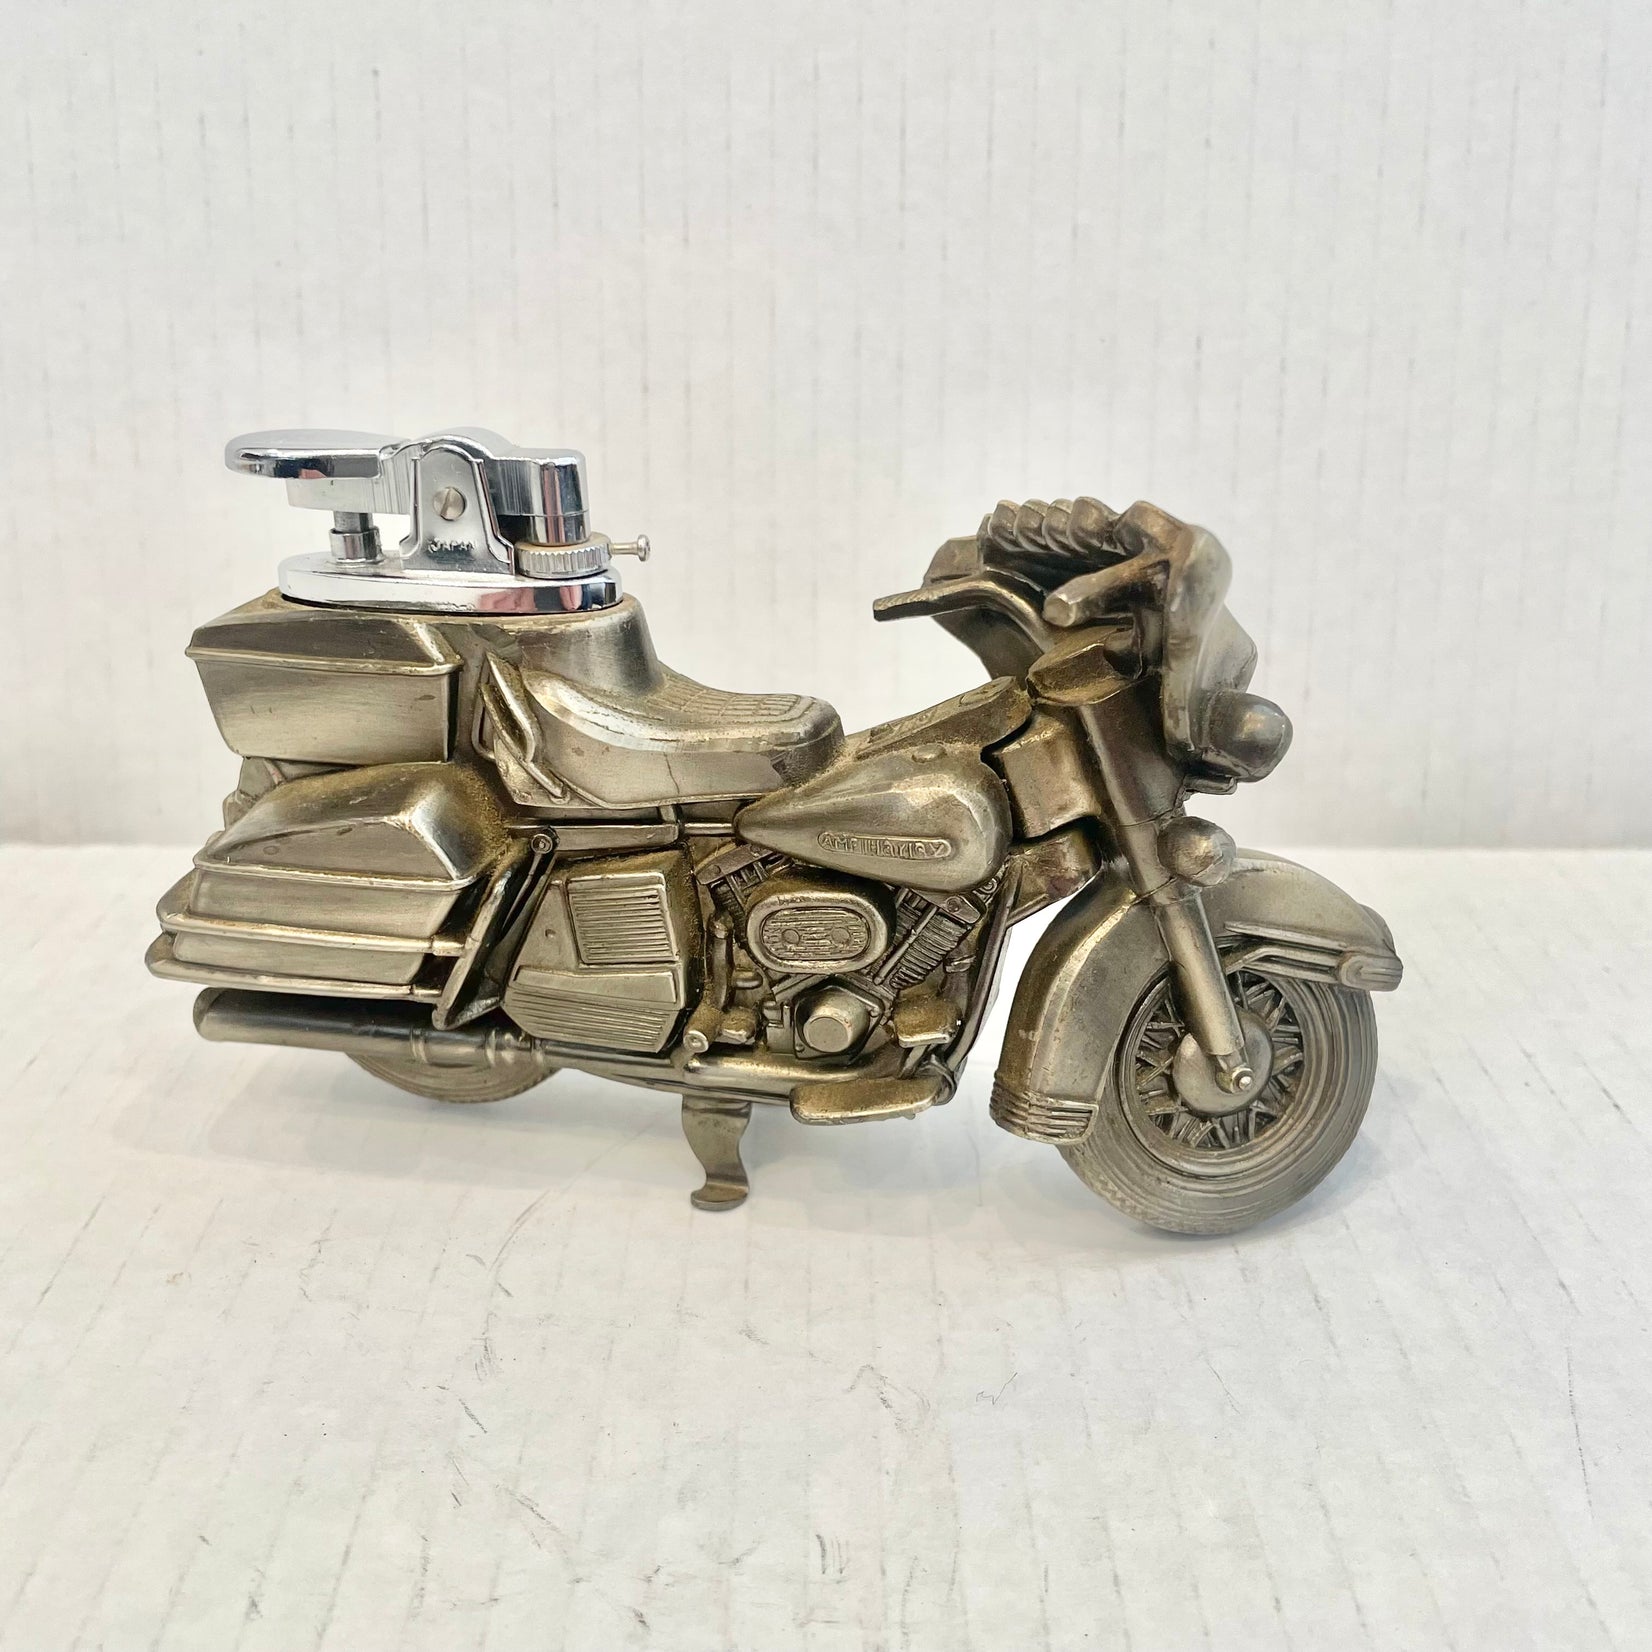 Harley Davidson AMF Motorcycle Lighter, 1980s Japan